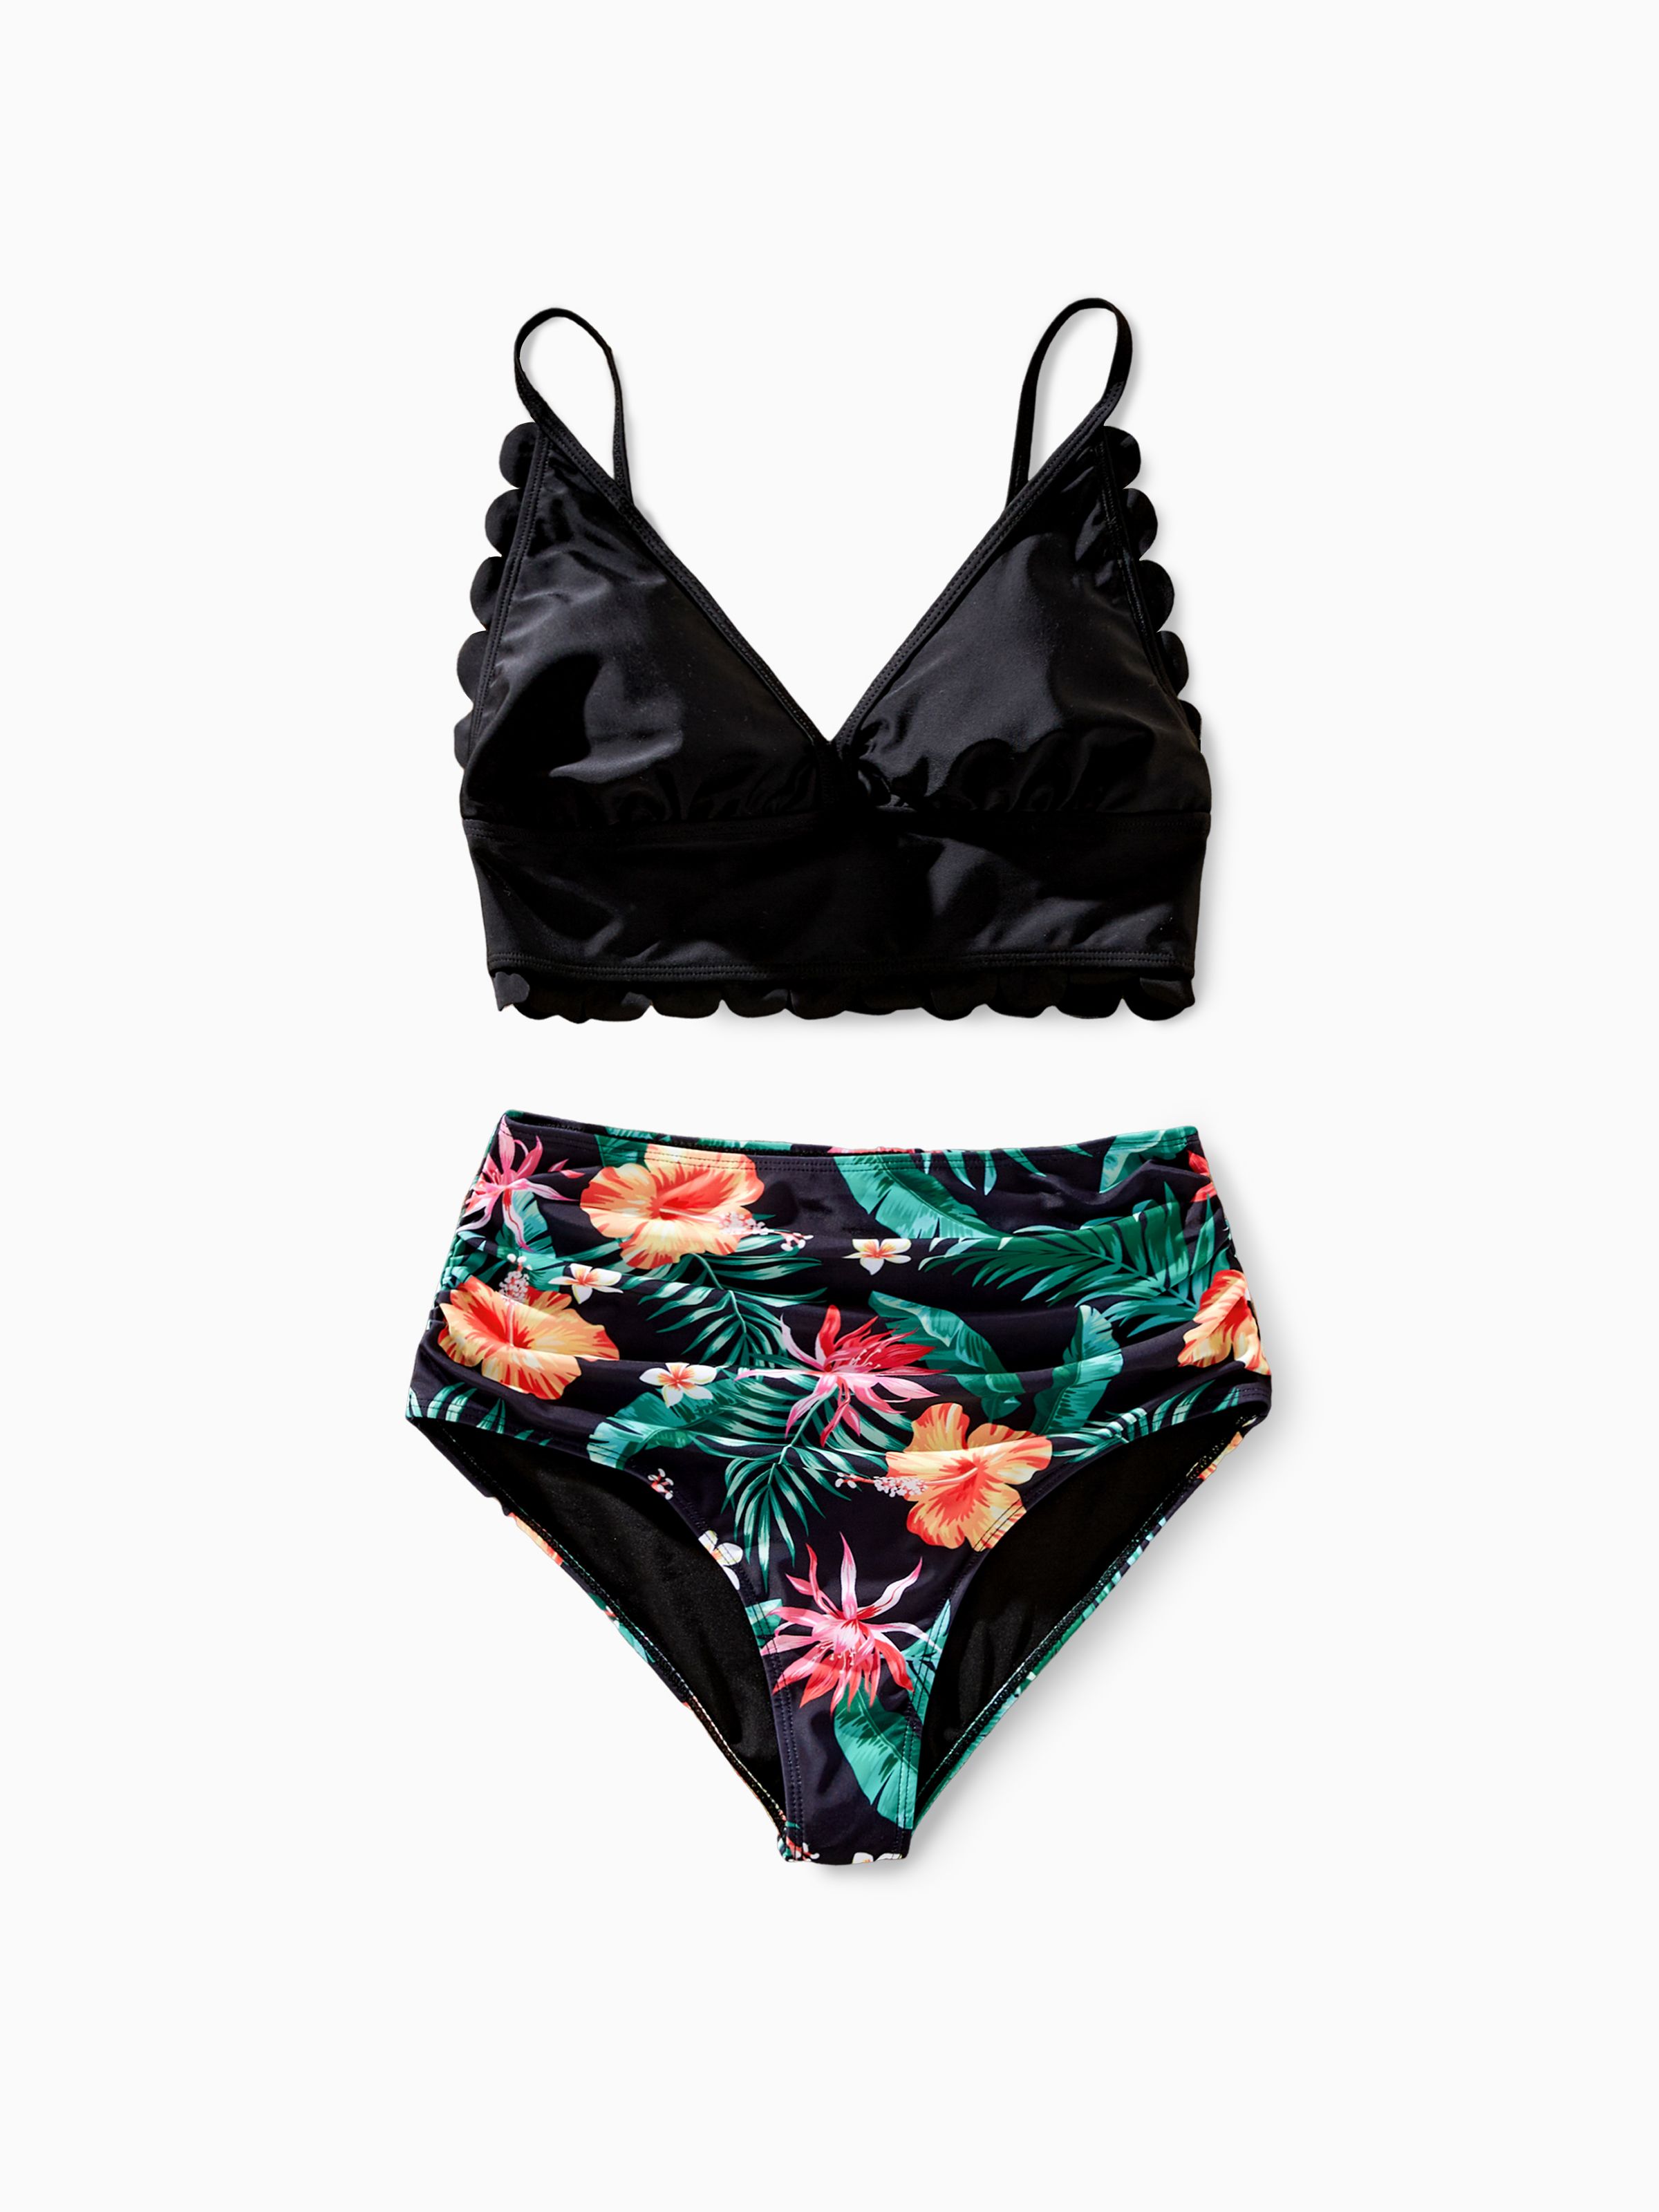 

Family Matching Tropical Floral Drawstring Swim Trunks or Shell Edge Bikini